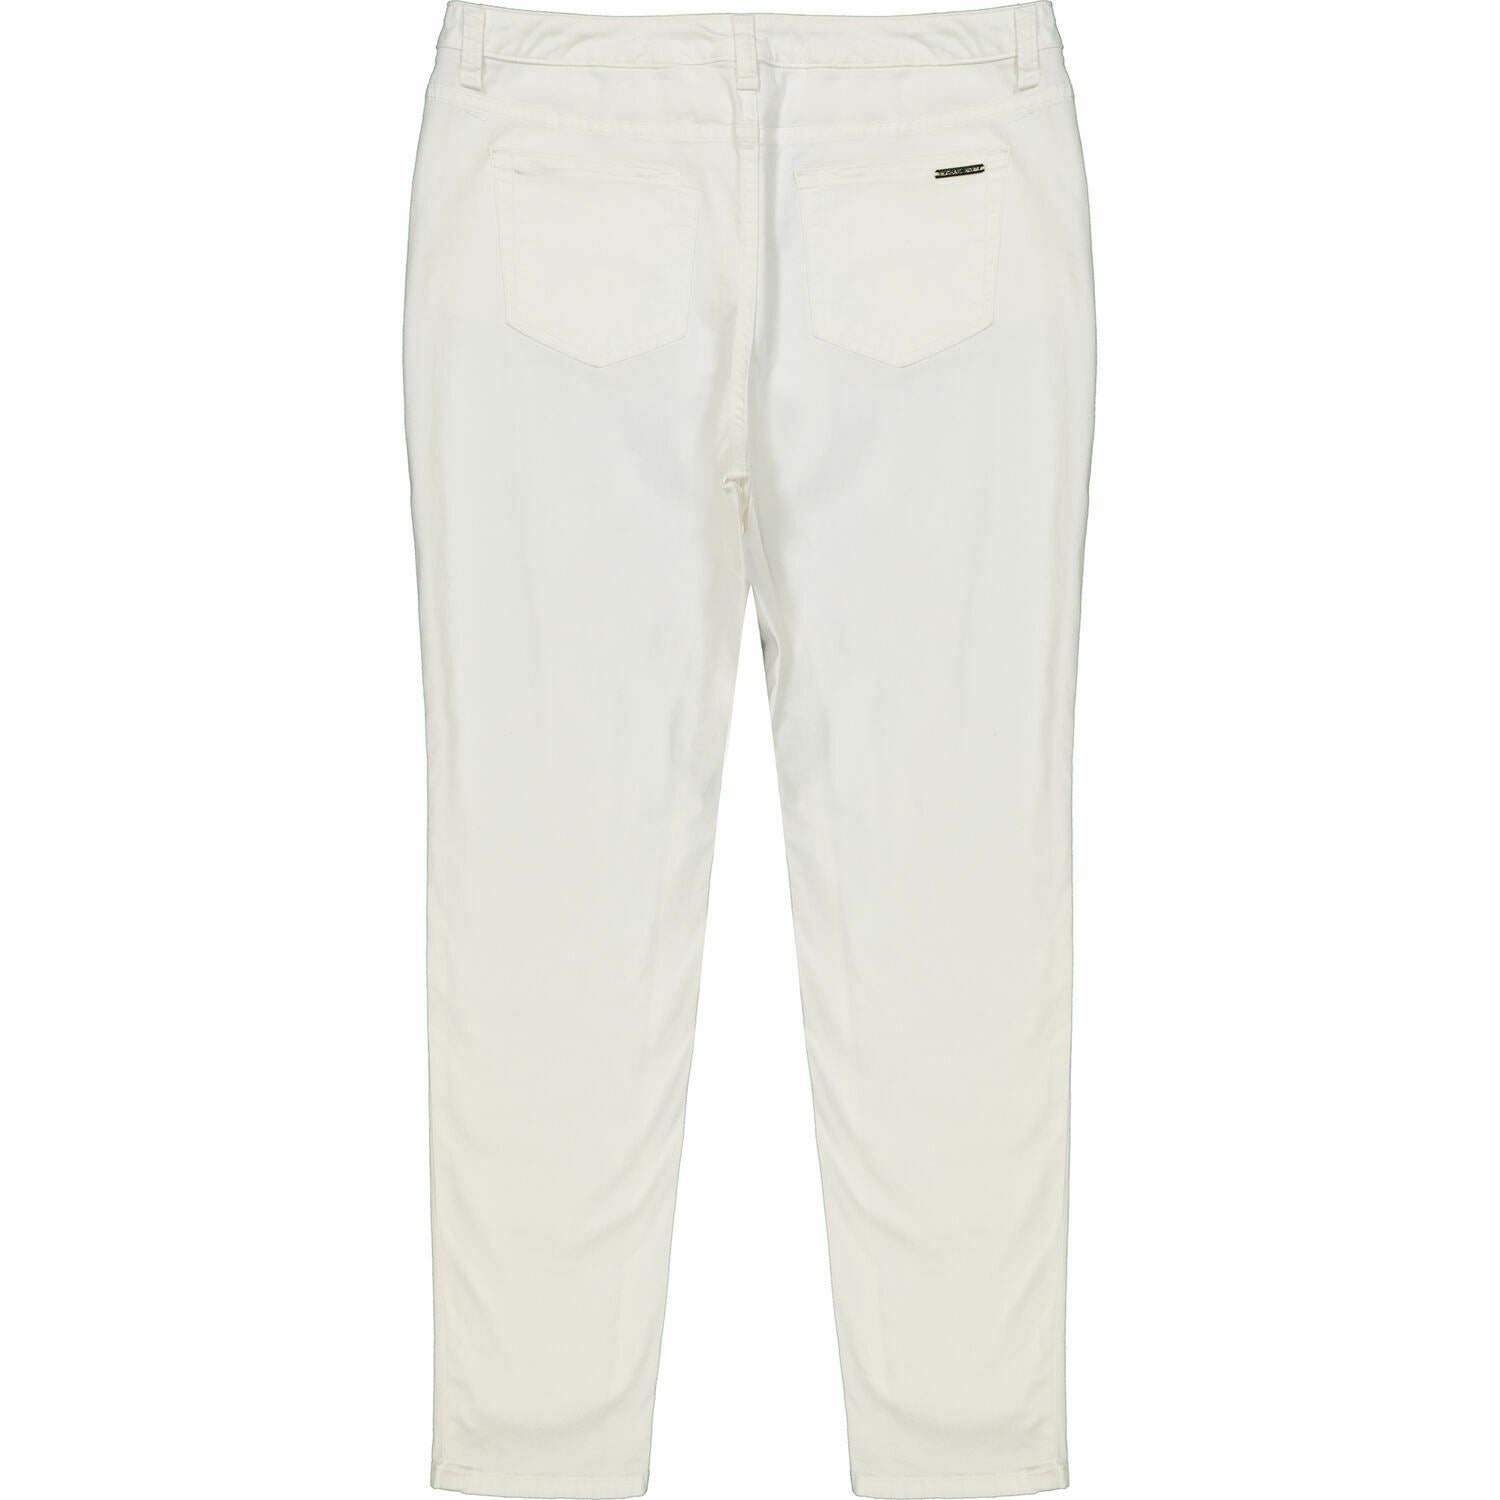 Michael Kors Women's Selma White Skinny Jeans, size UK 16